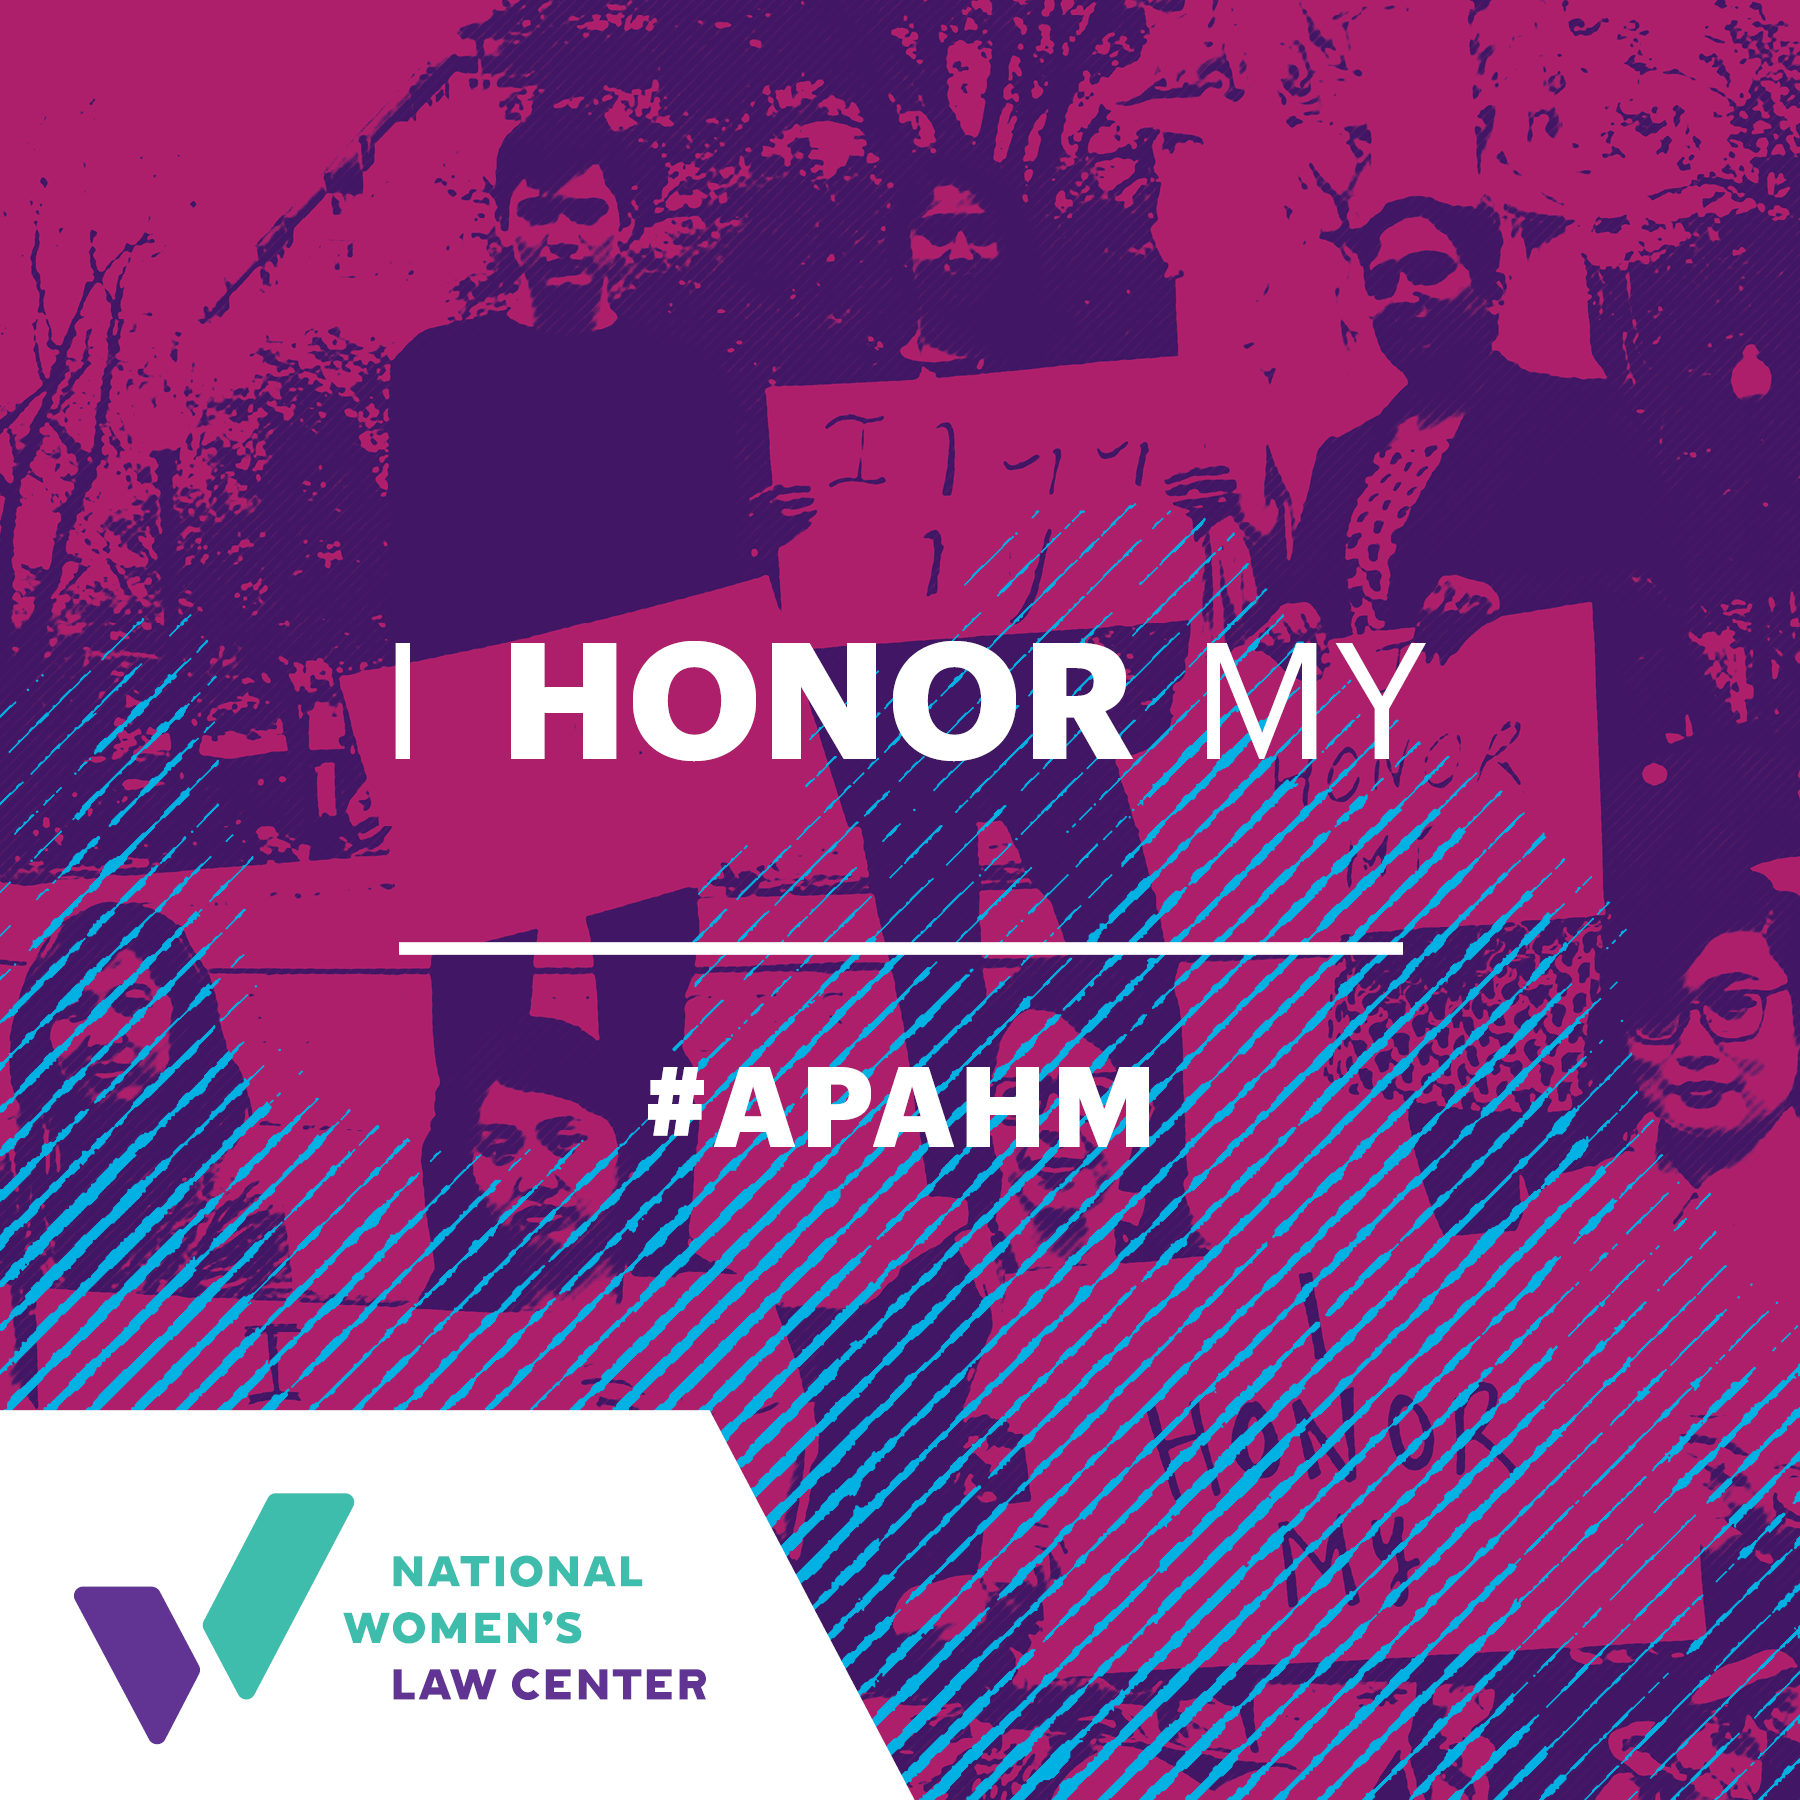 I Honor My #APAHM